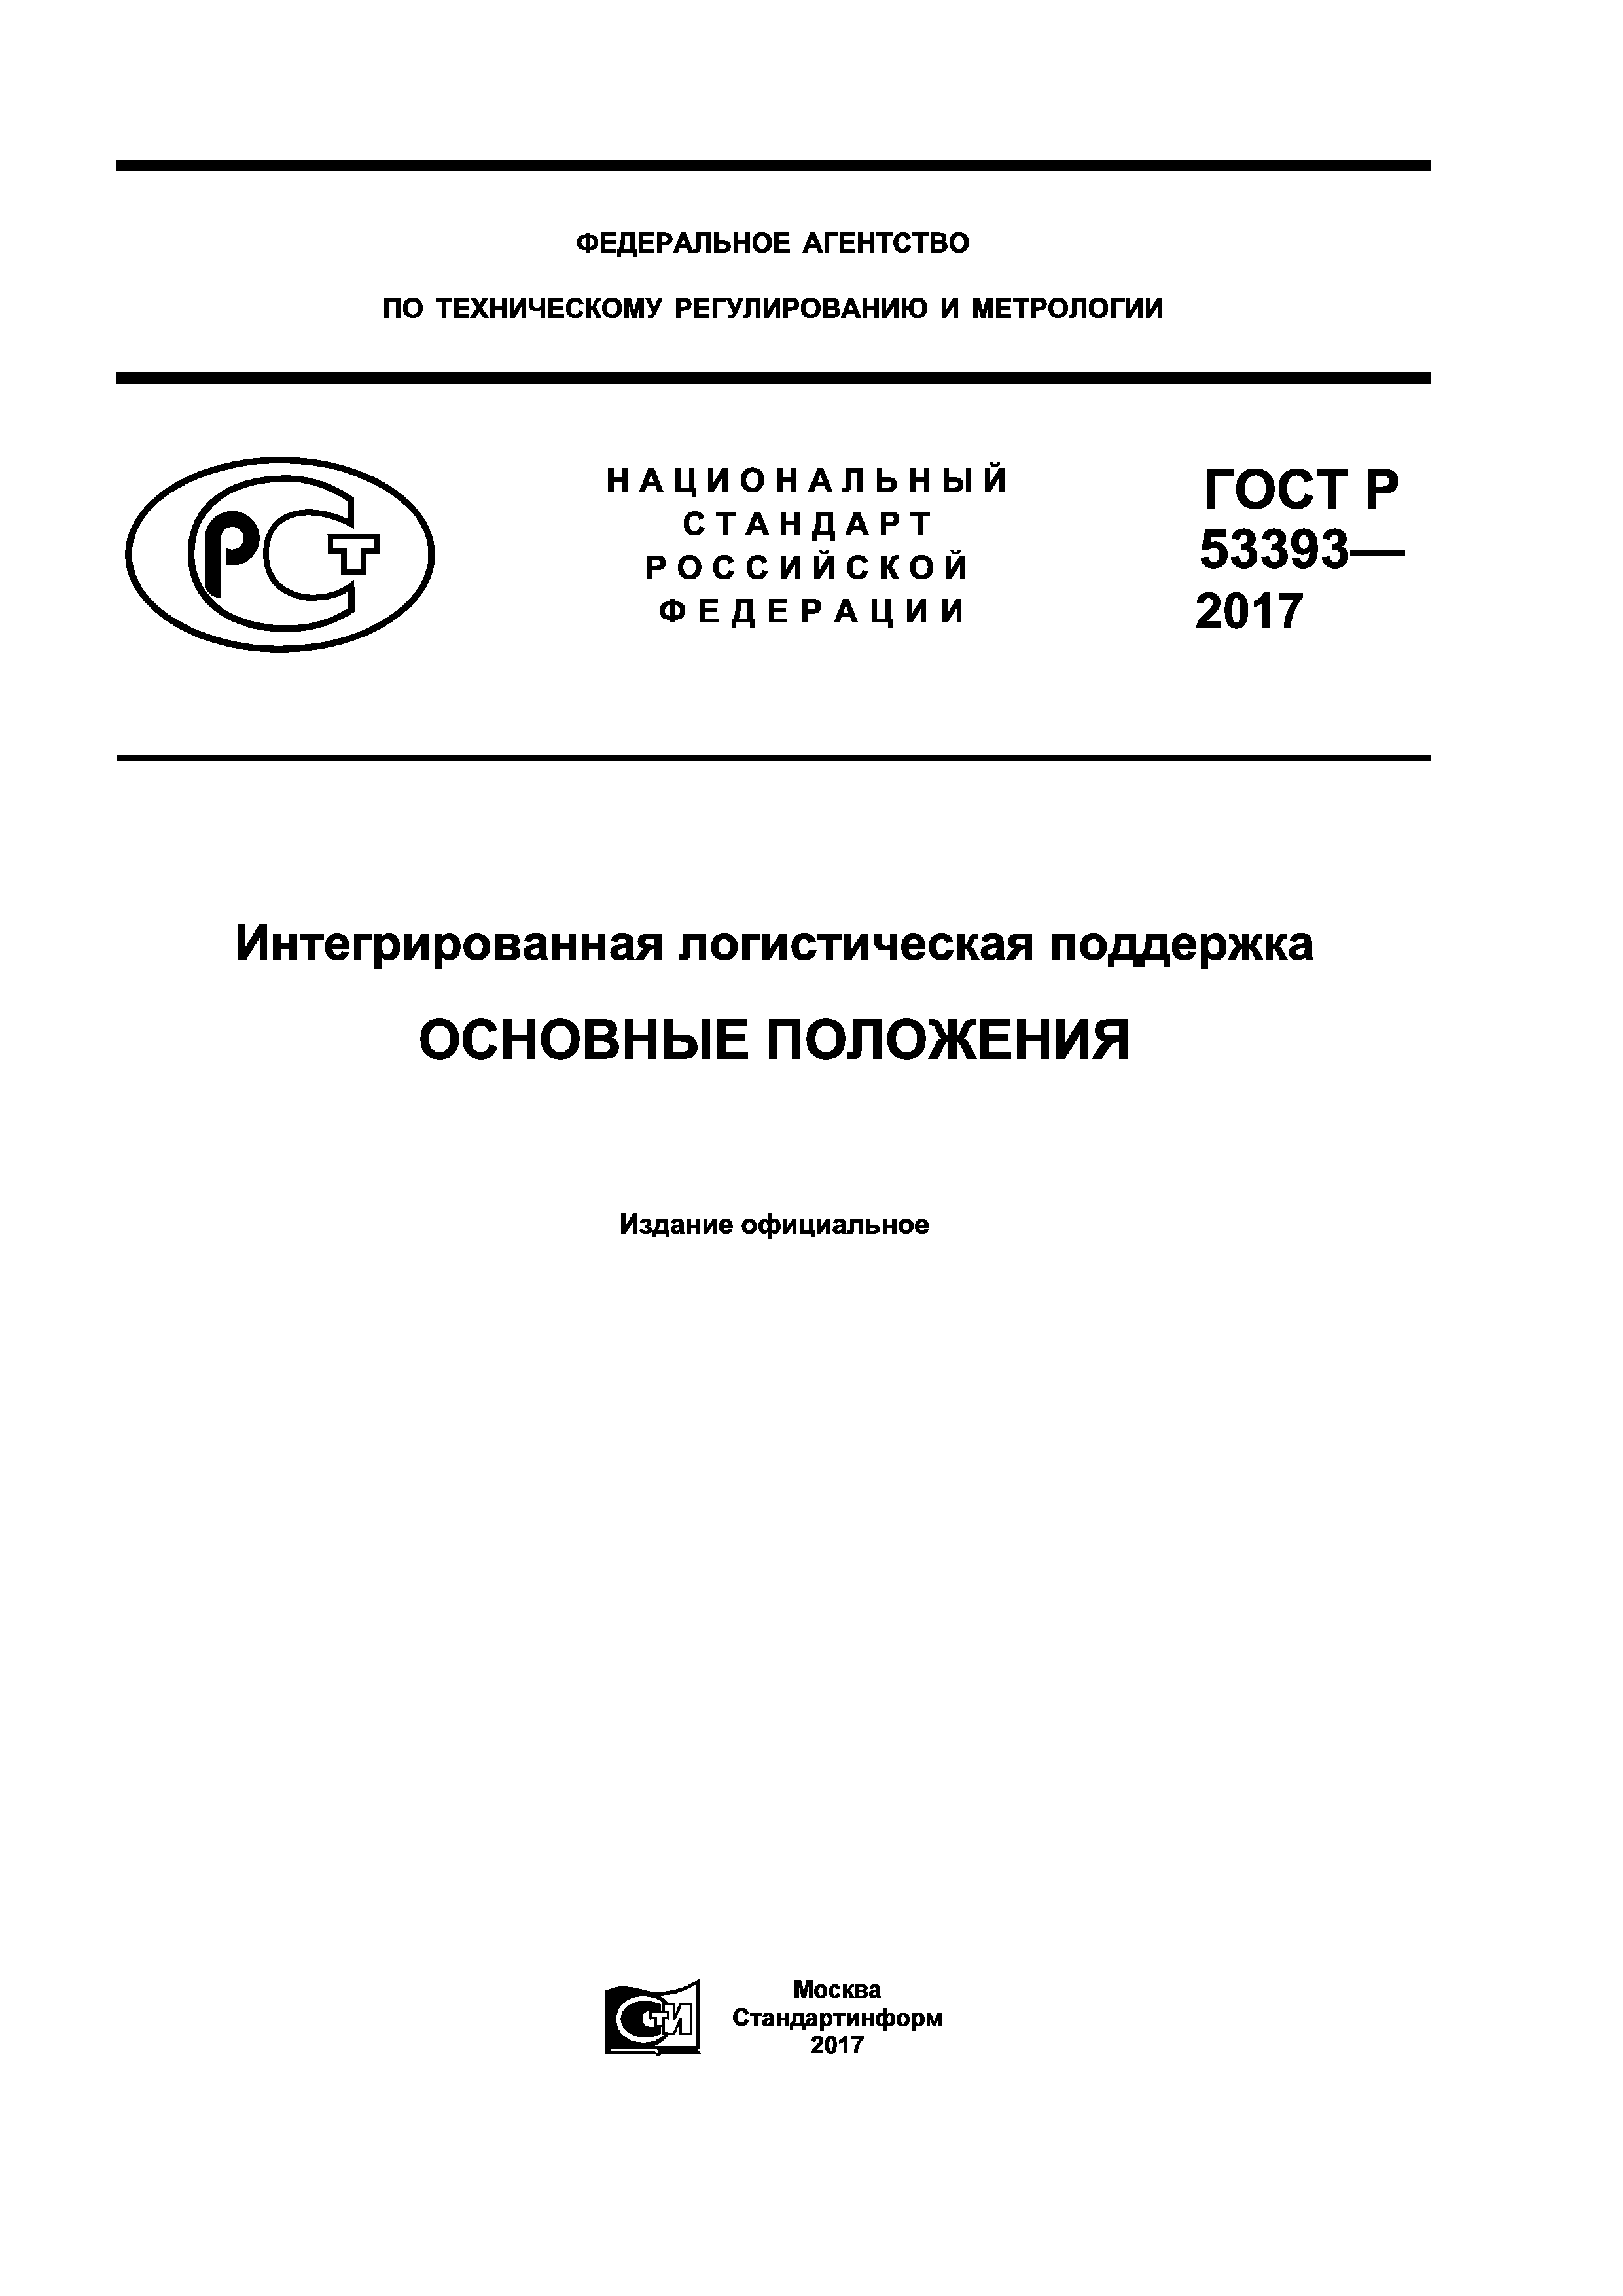 ГОСТ Р 53393-2017